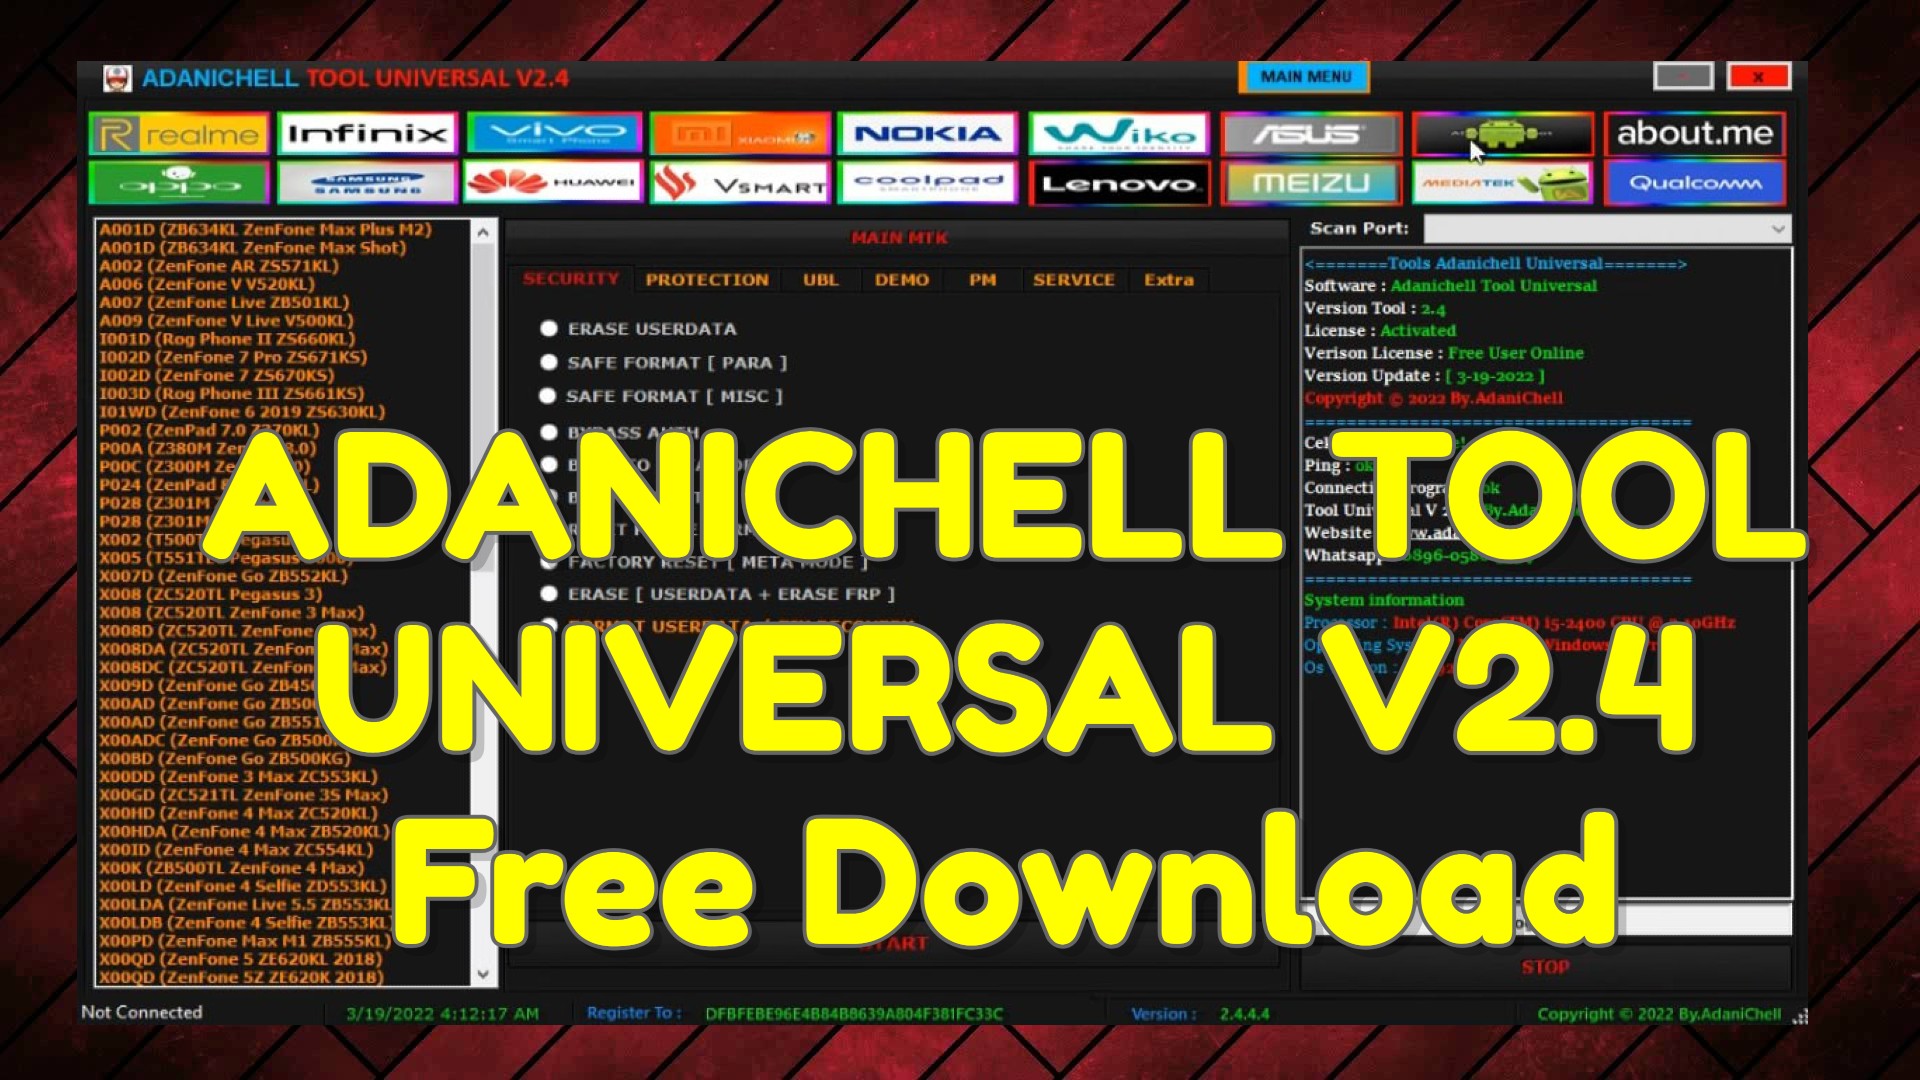 ADANICHELL TOOL UNIVERSAL V2.4 Free Download